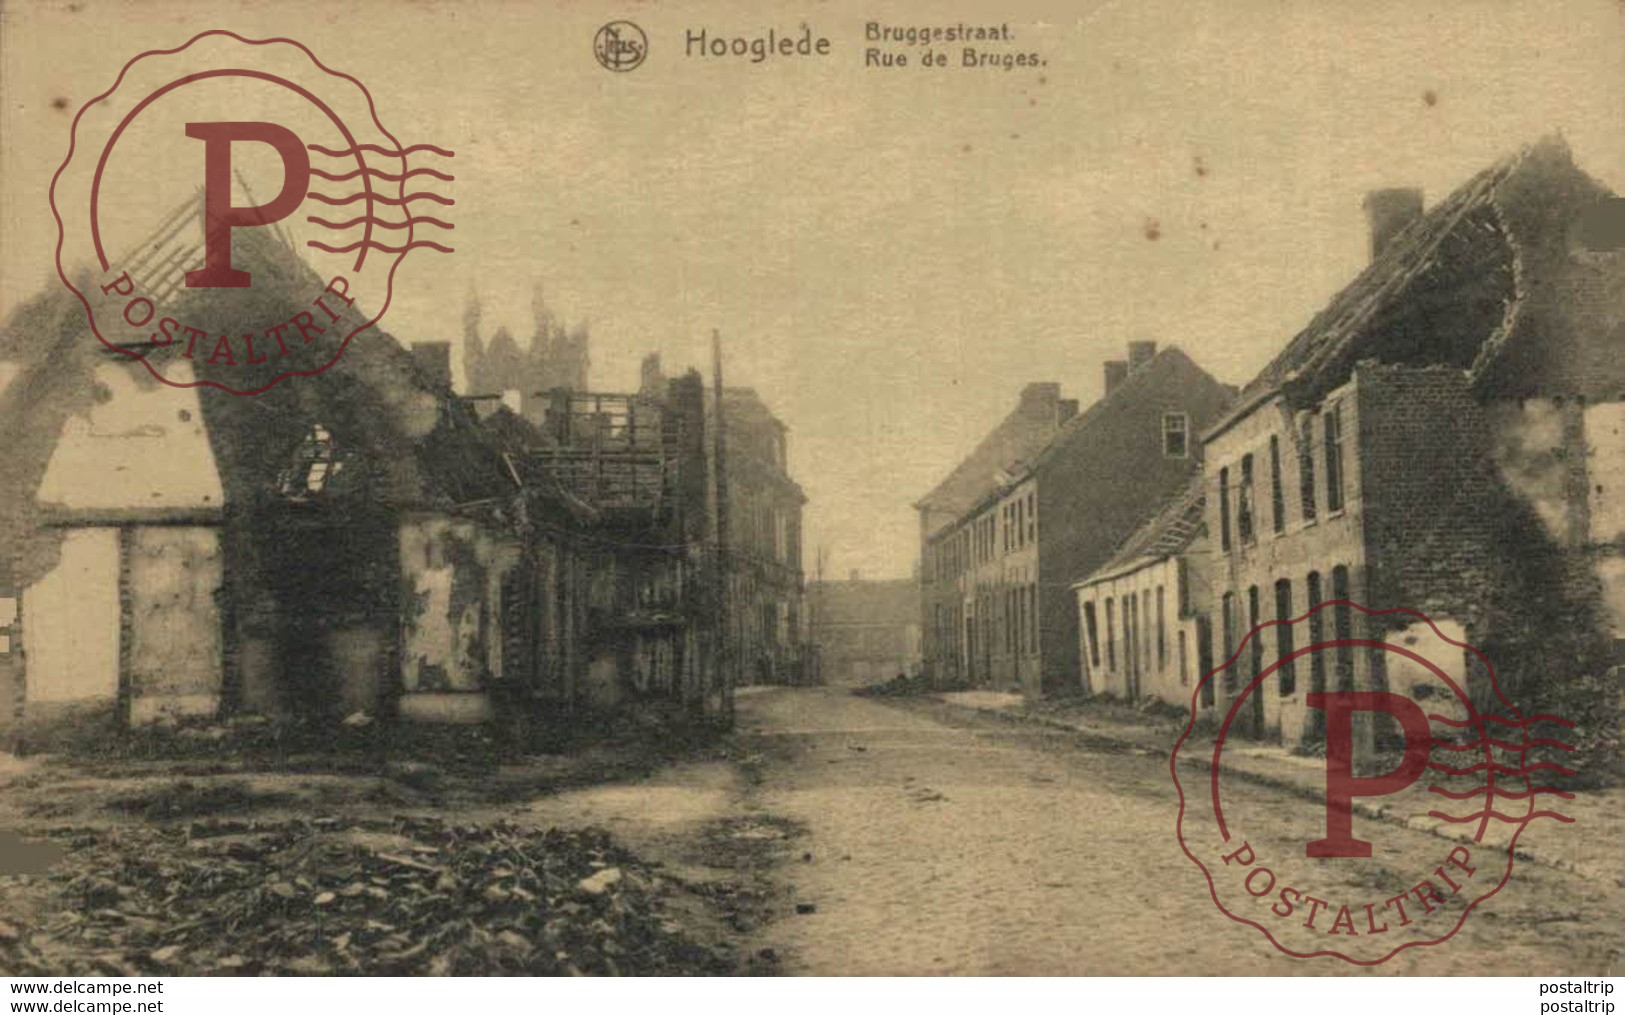 Hooglede Bruggestraat Rue De Bruges SEE TOP   BELGIQUE 1914/15 WWI WWICOLLECTION - Hooglede